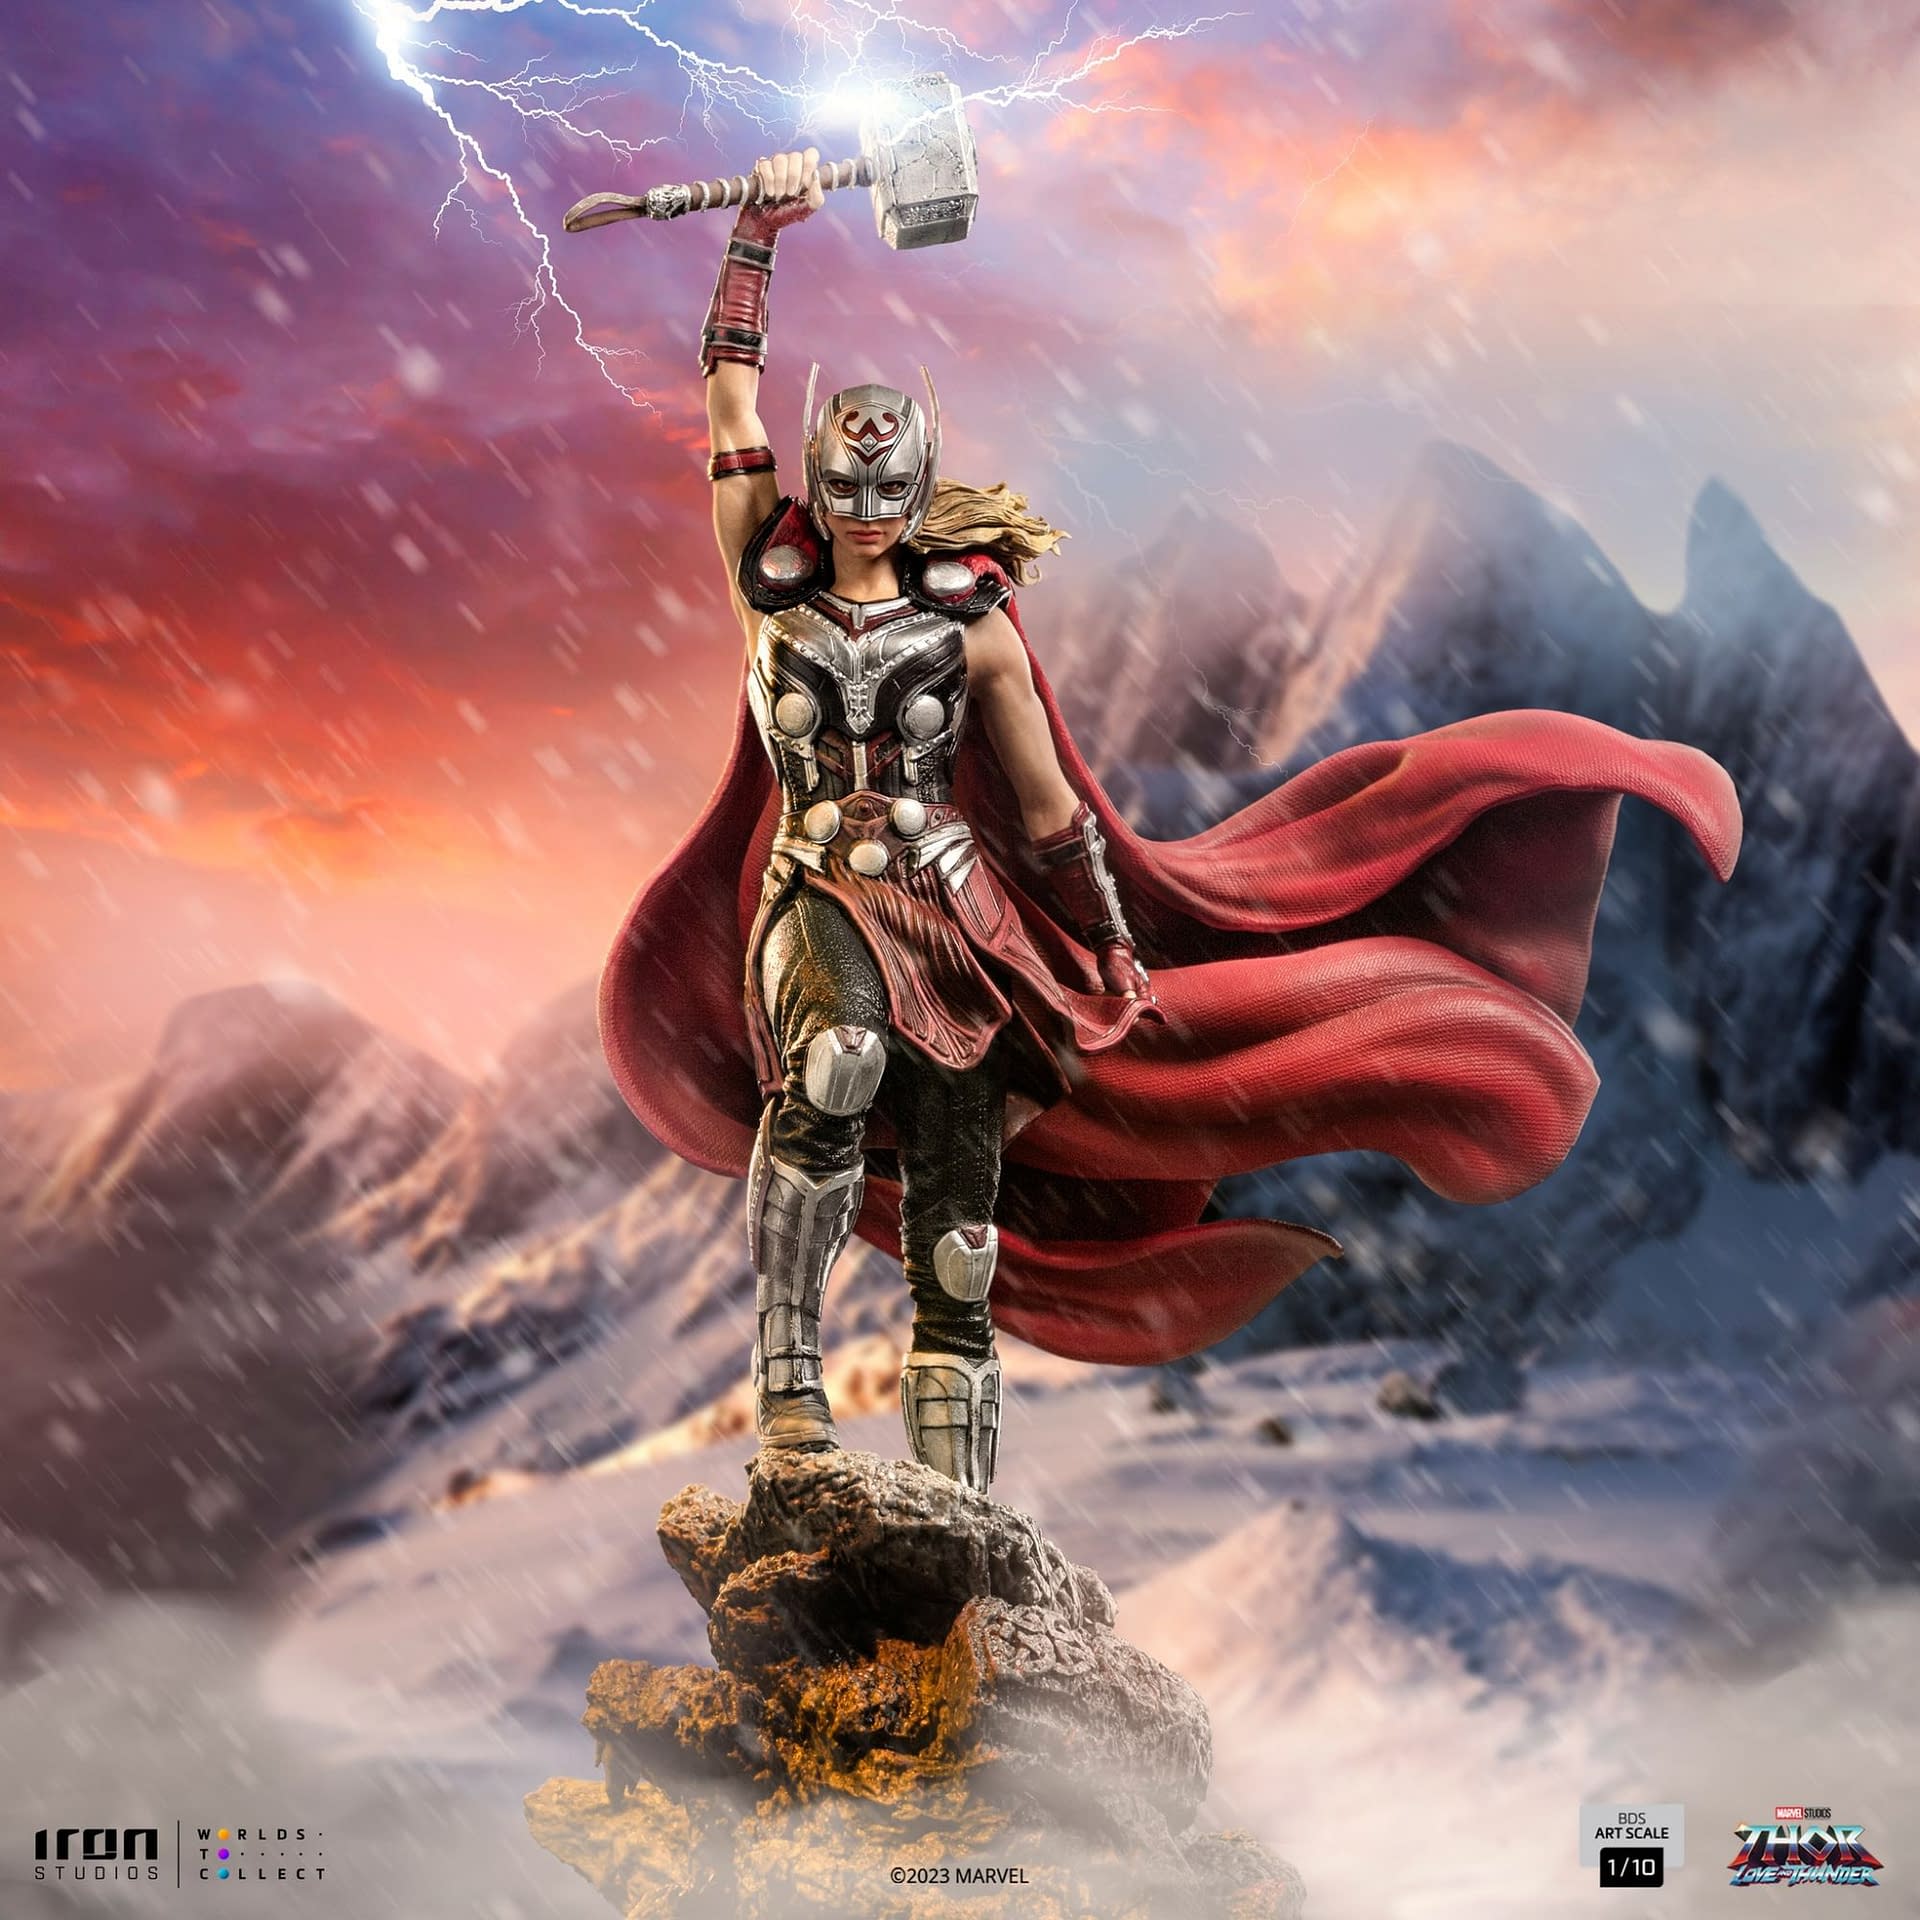 Jane Foster Wields Mjolnir with Iron Studios New Mighty Thor Statue